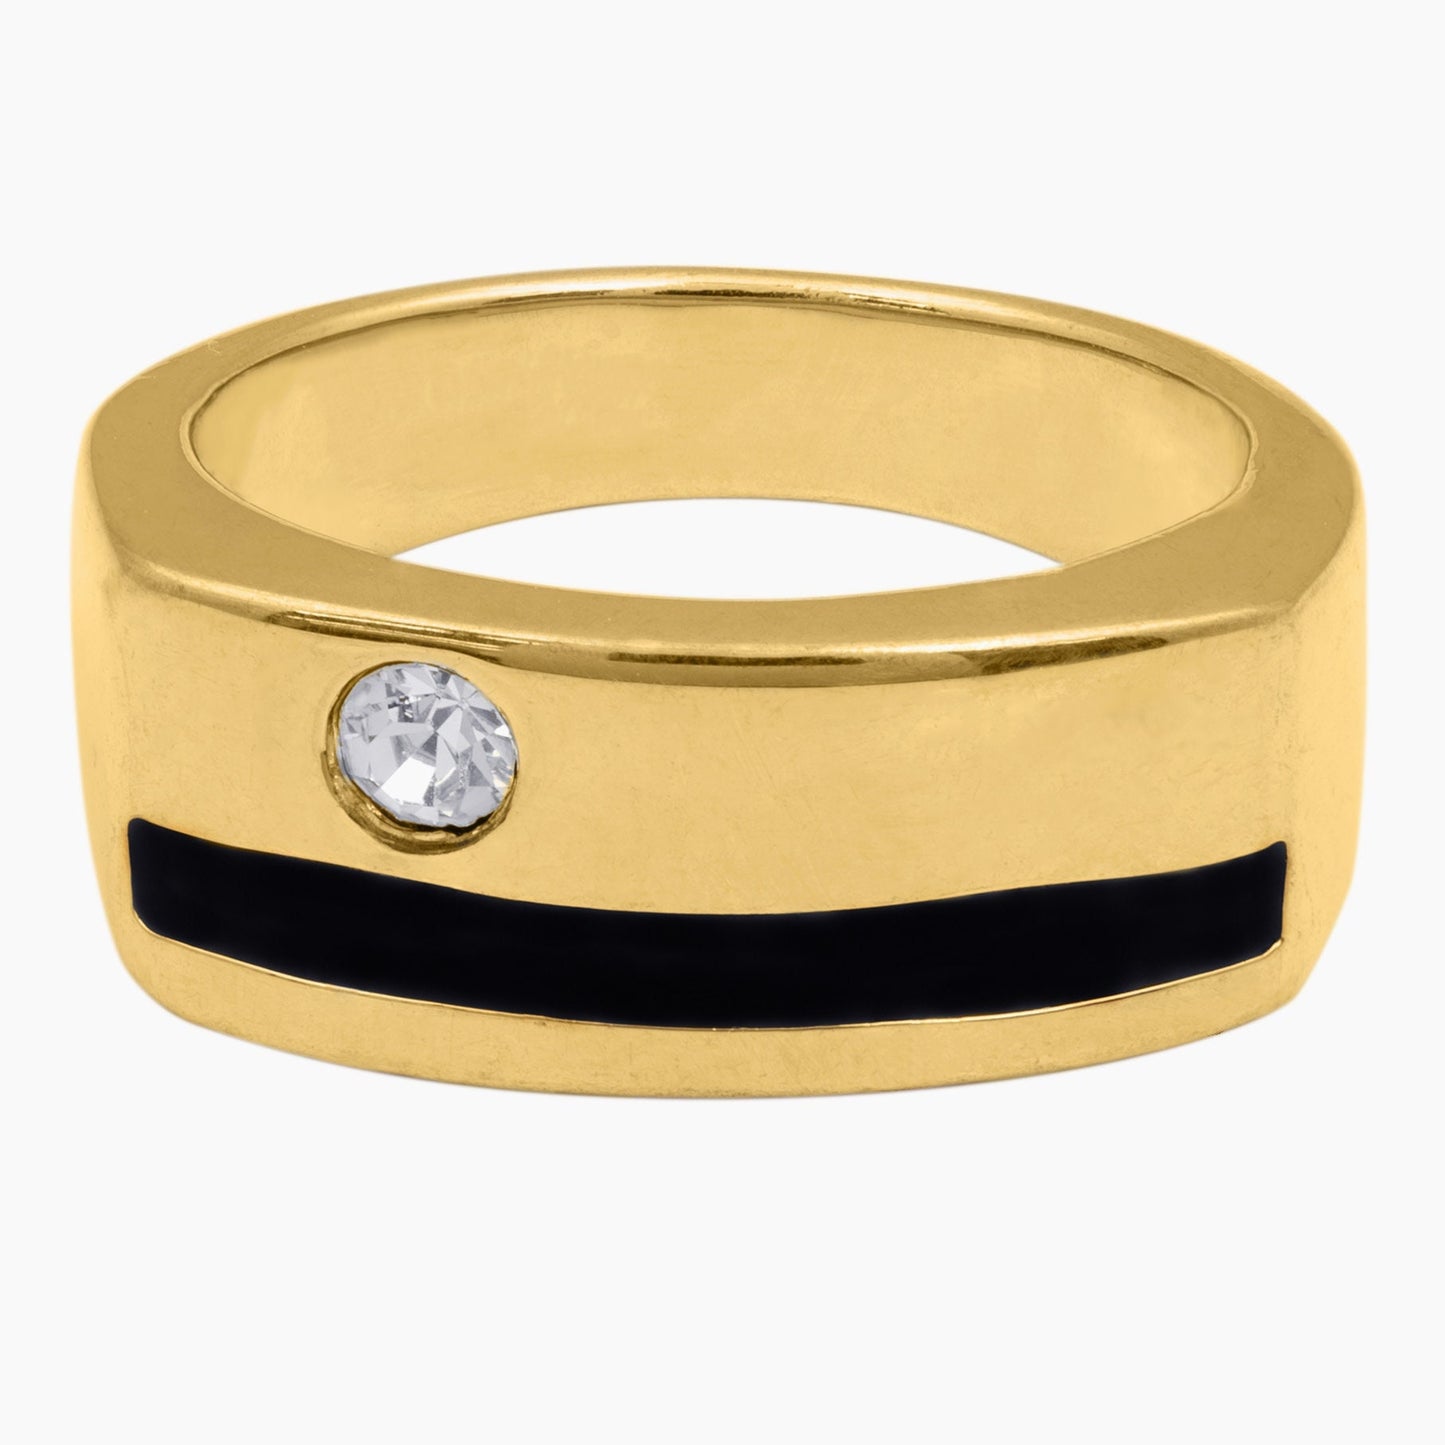 Vintage Ring 1980s Austrian Crystal with Black Enamel Detail 18kt Gold Plated Mens Signet Antique Ring #R6007 Size: undefined